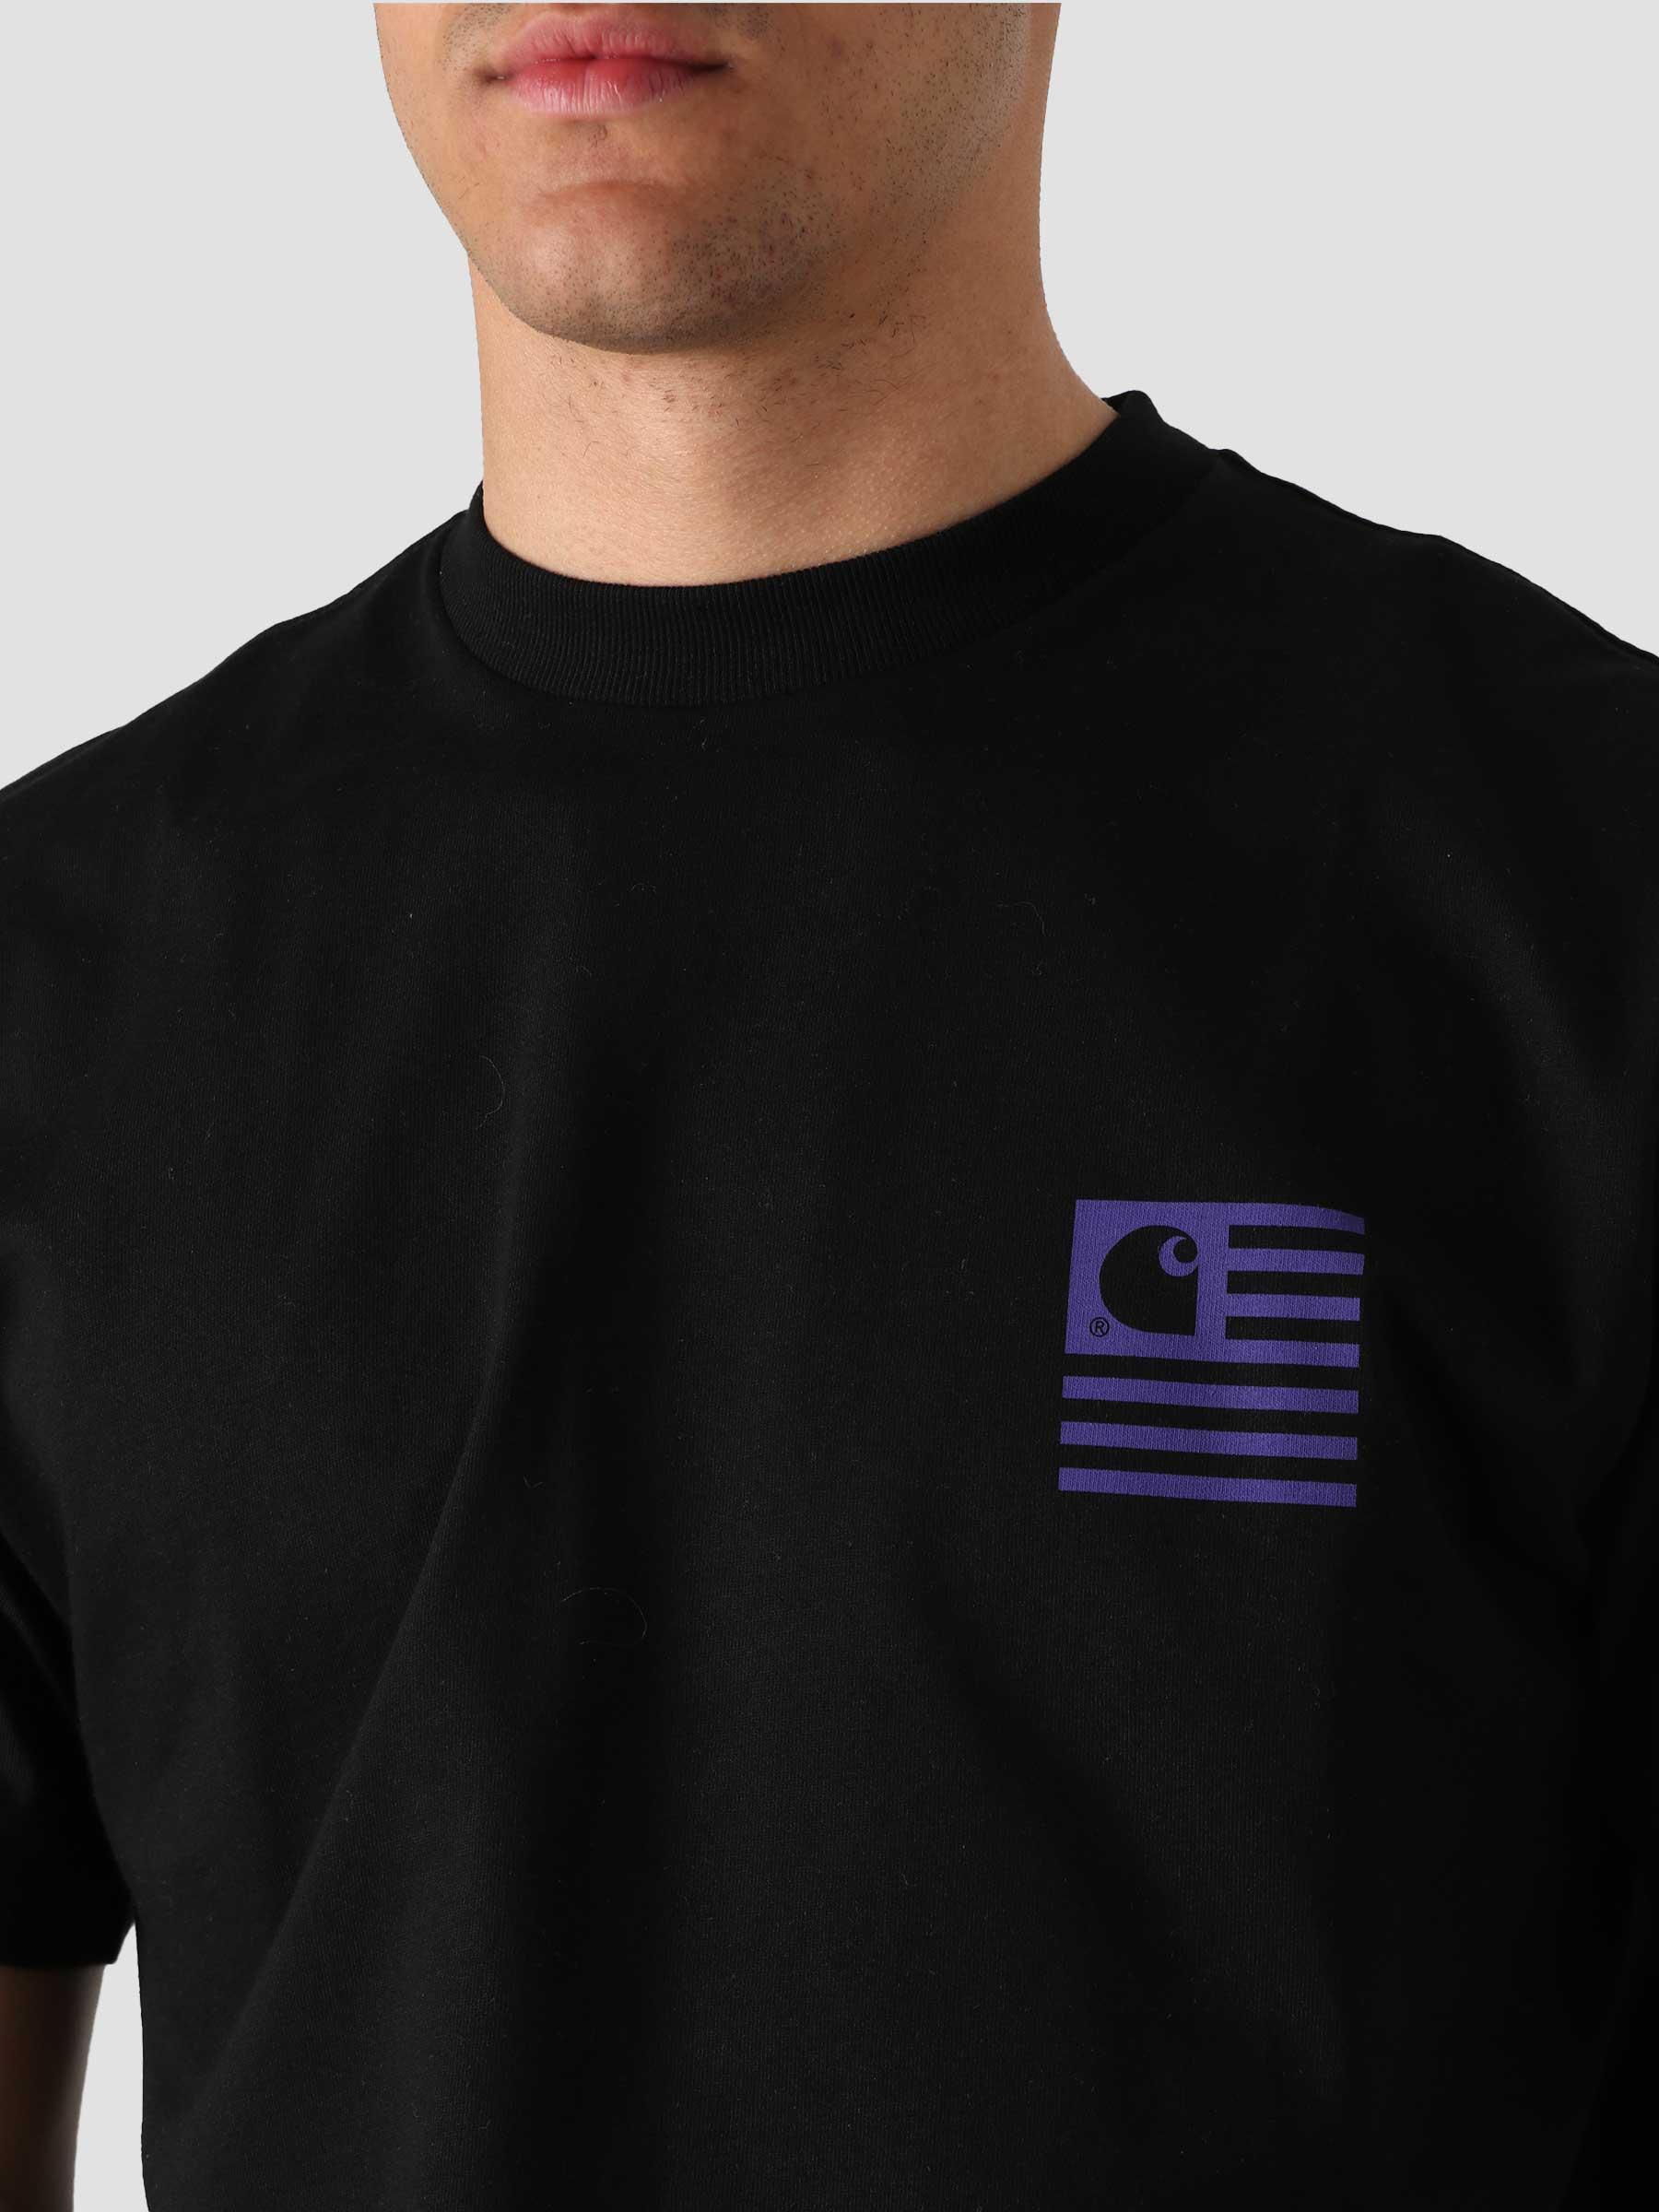 S/S Medley State T-Shirt Black I030169-89XX